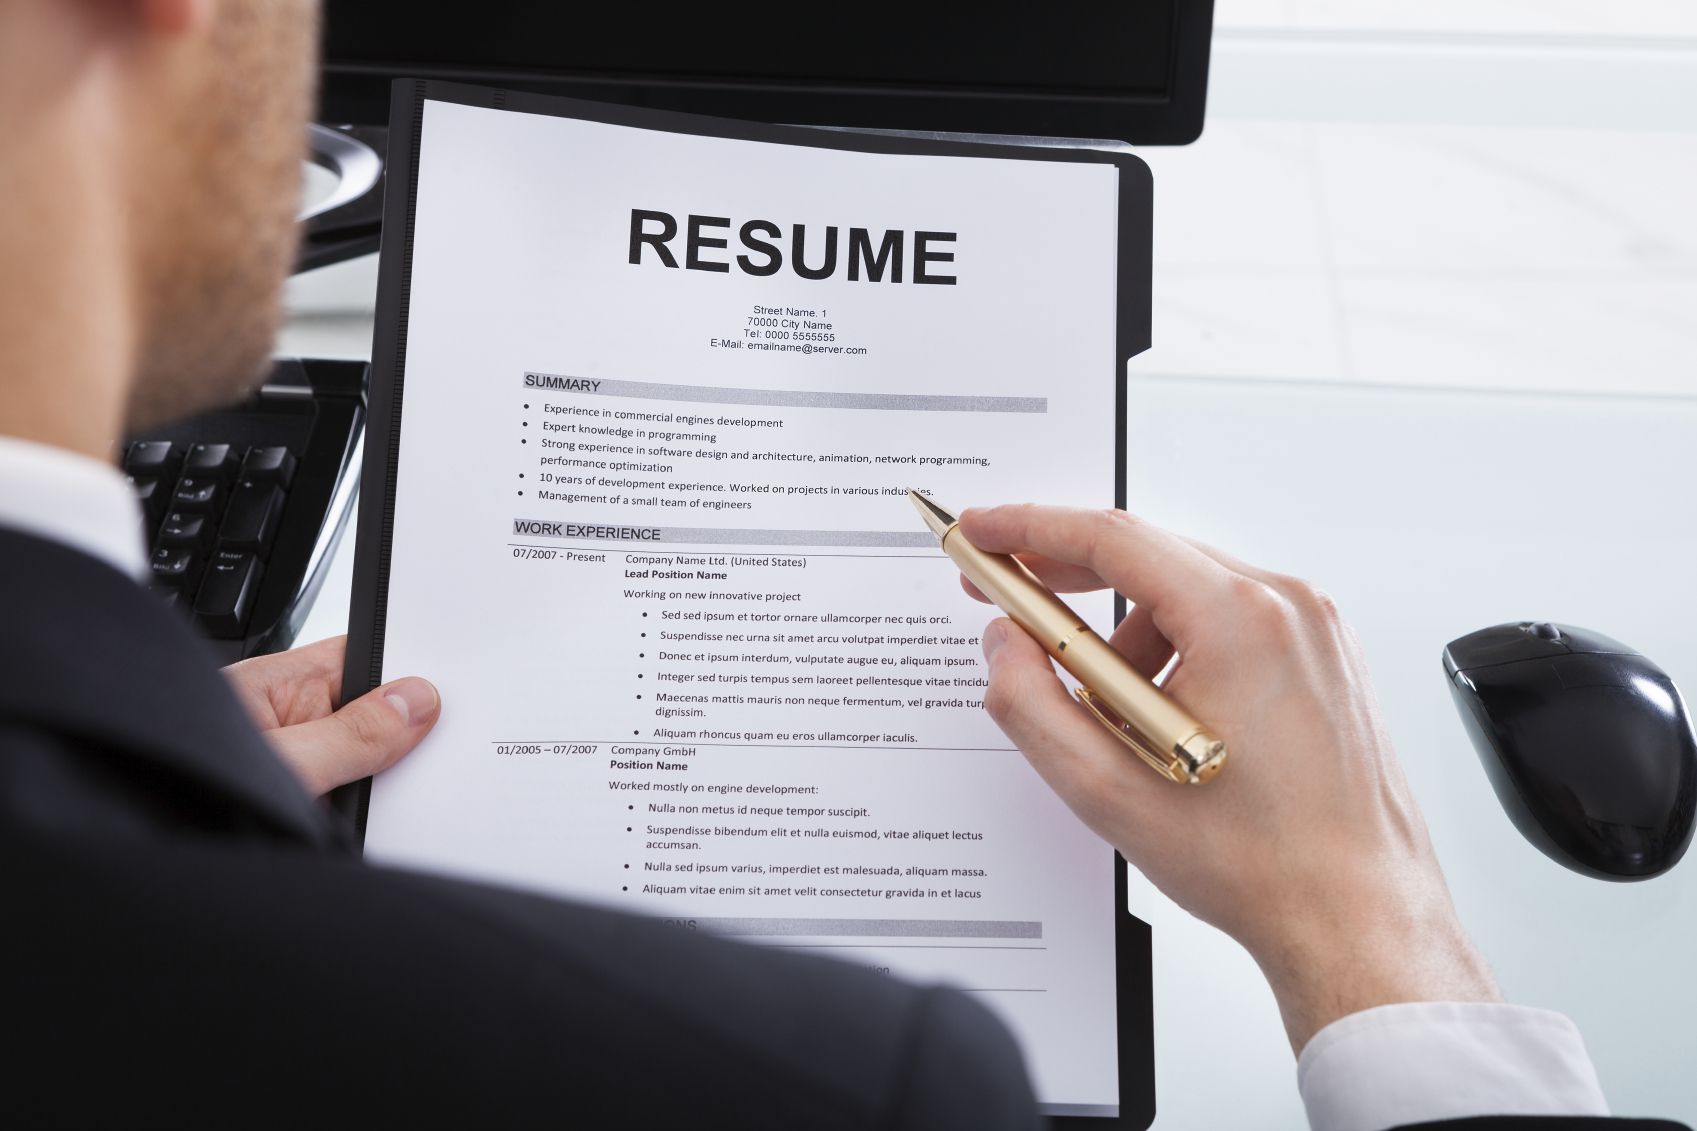 resume job review process resume checklist job for bazil